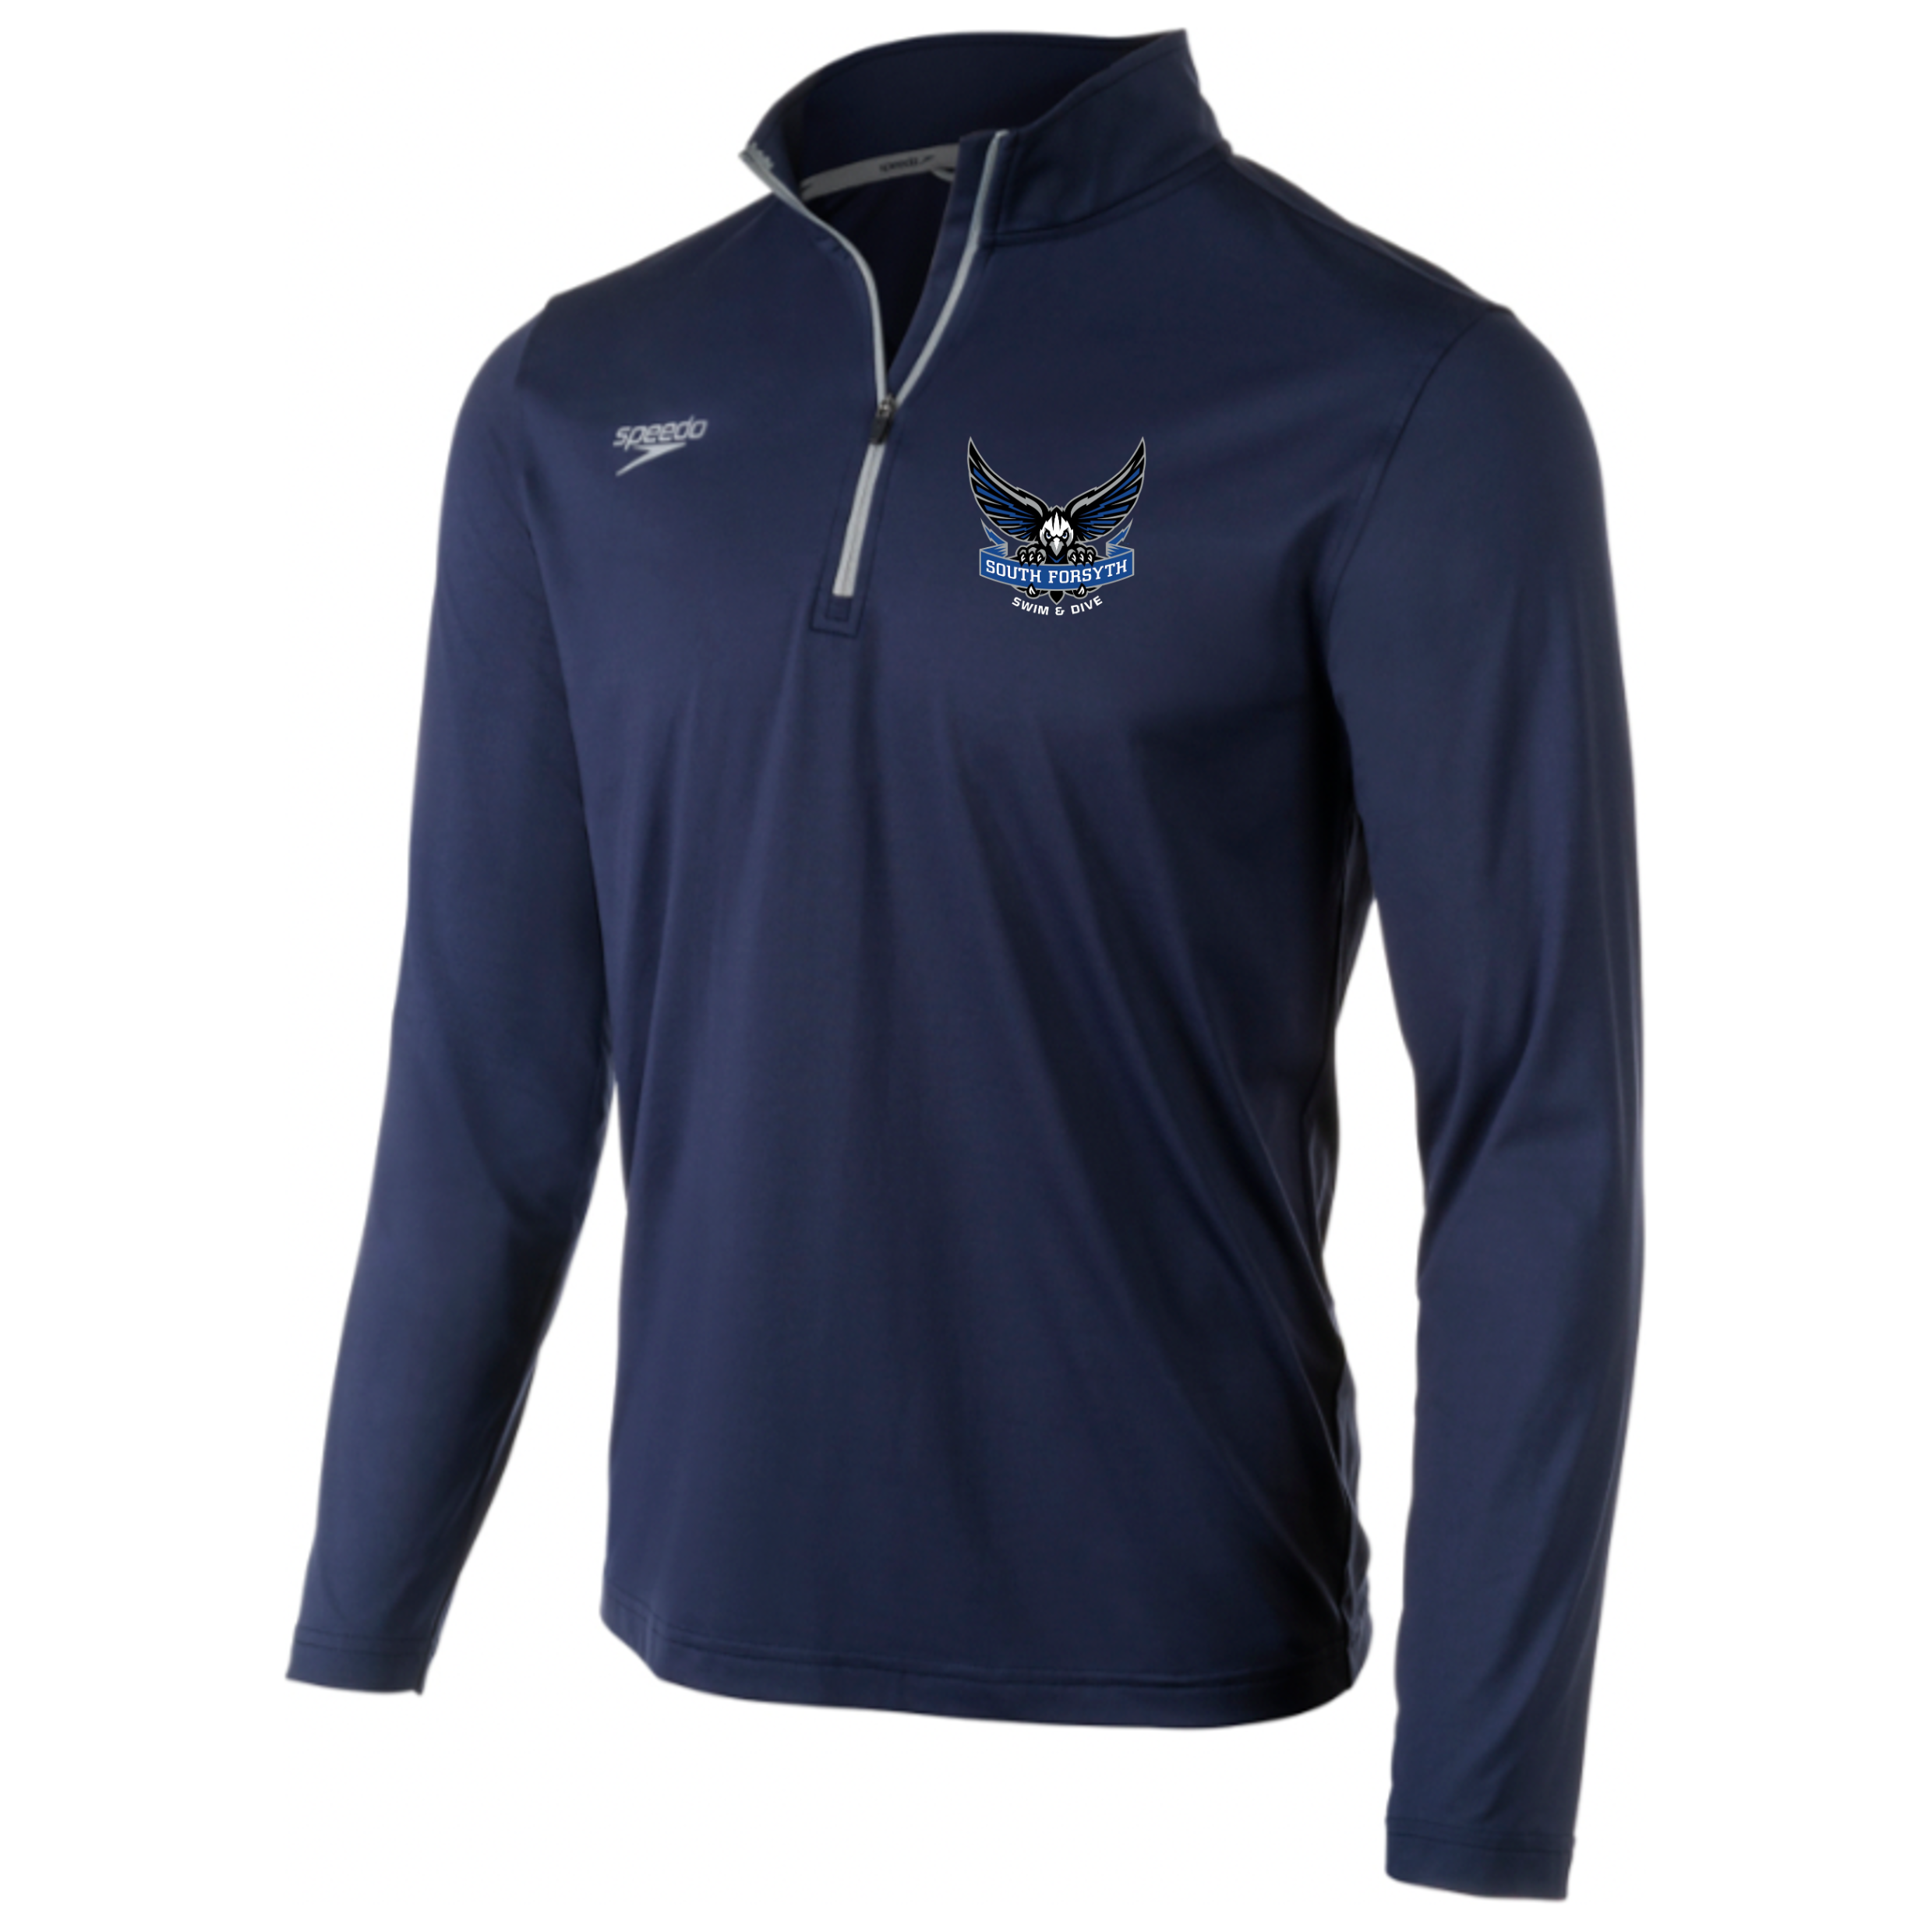 Speedo Jersey 1/4 Zip Long Sleeve T-Shirt (Customized) - South Forsyth